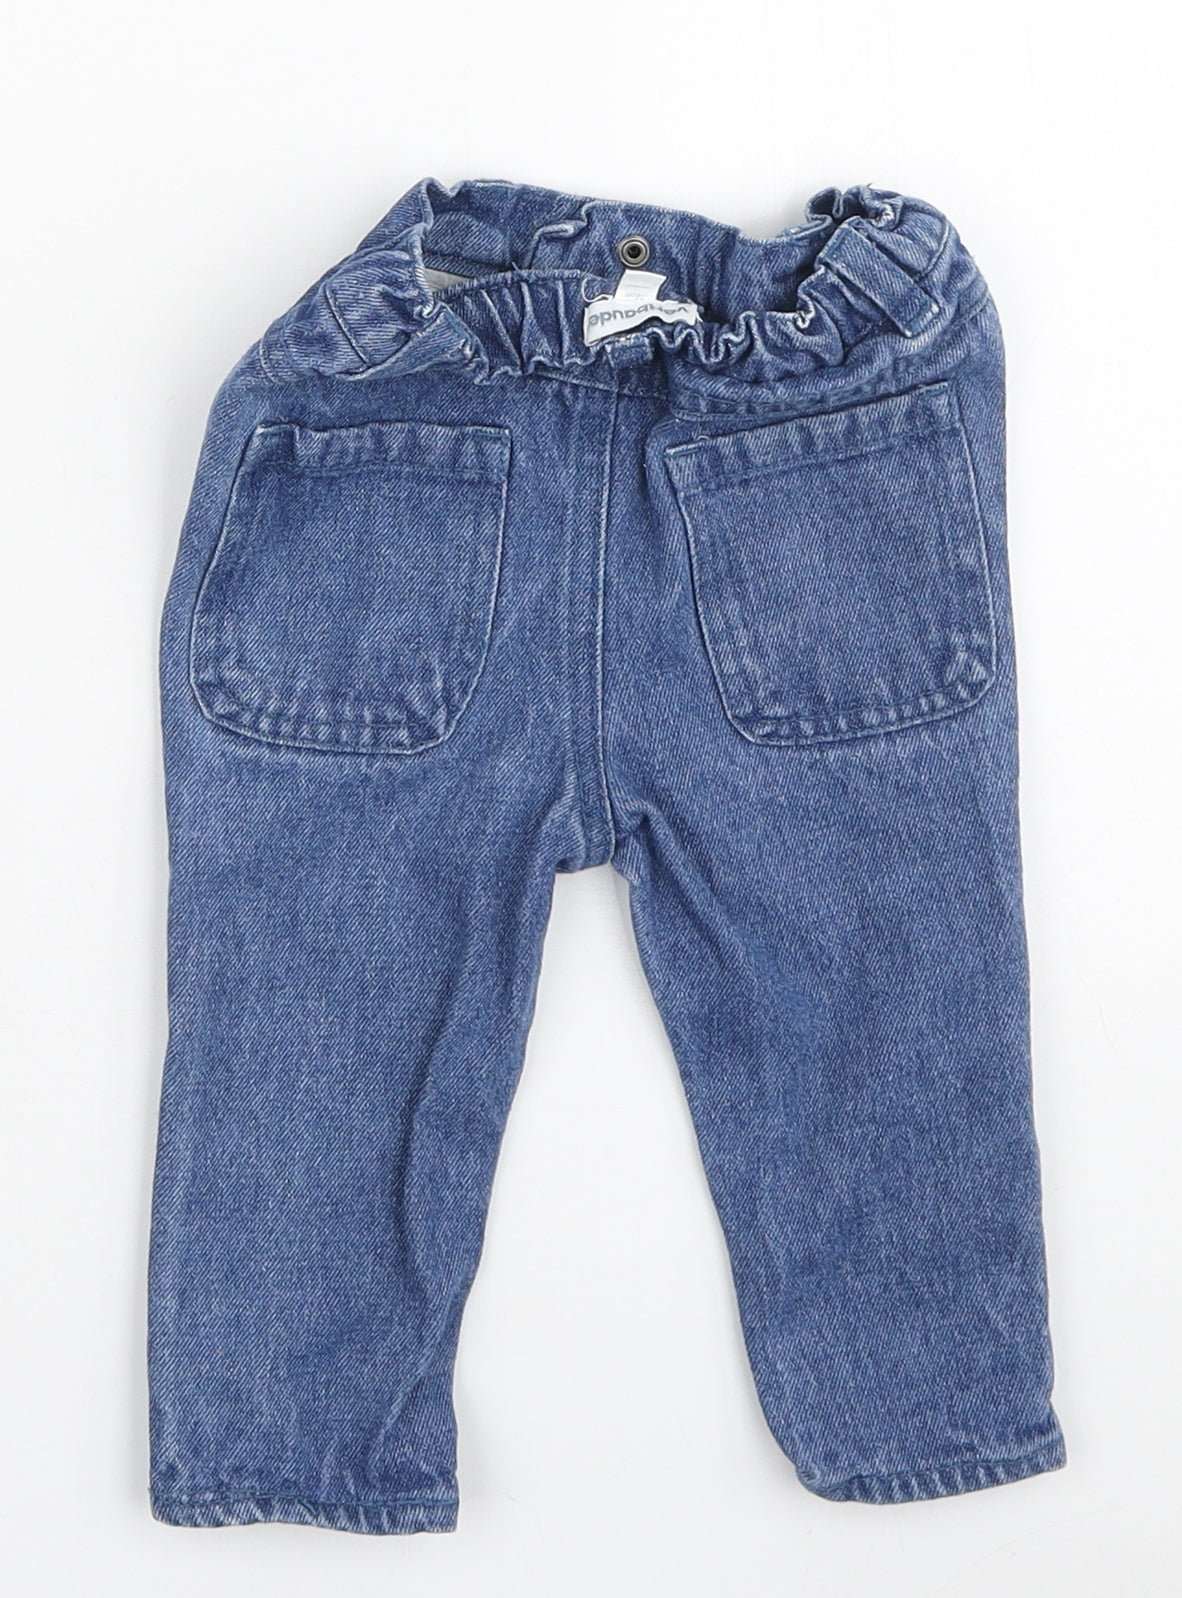 Vertbaudet Girls Blue Cotton Jogger Jeans Size 9-12 Months Snap